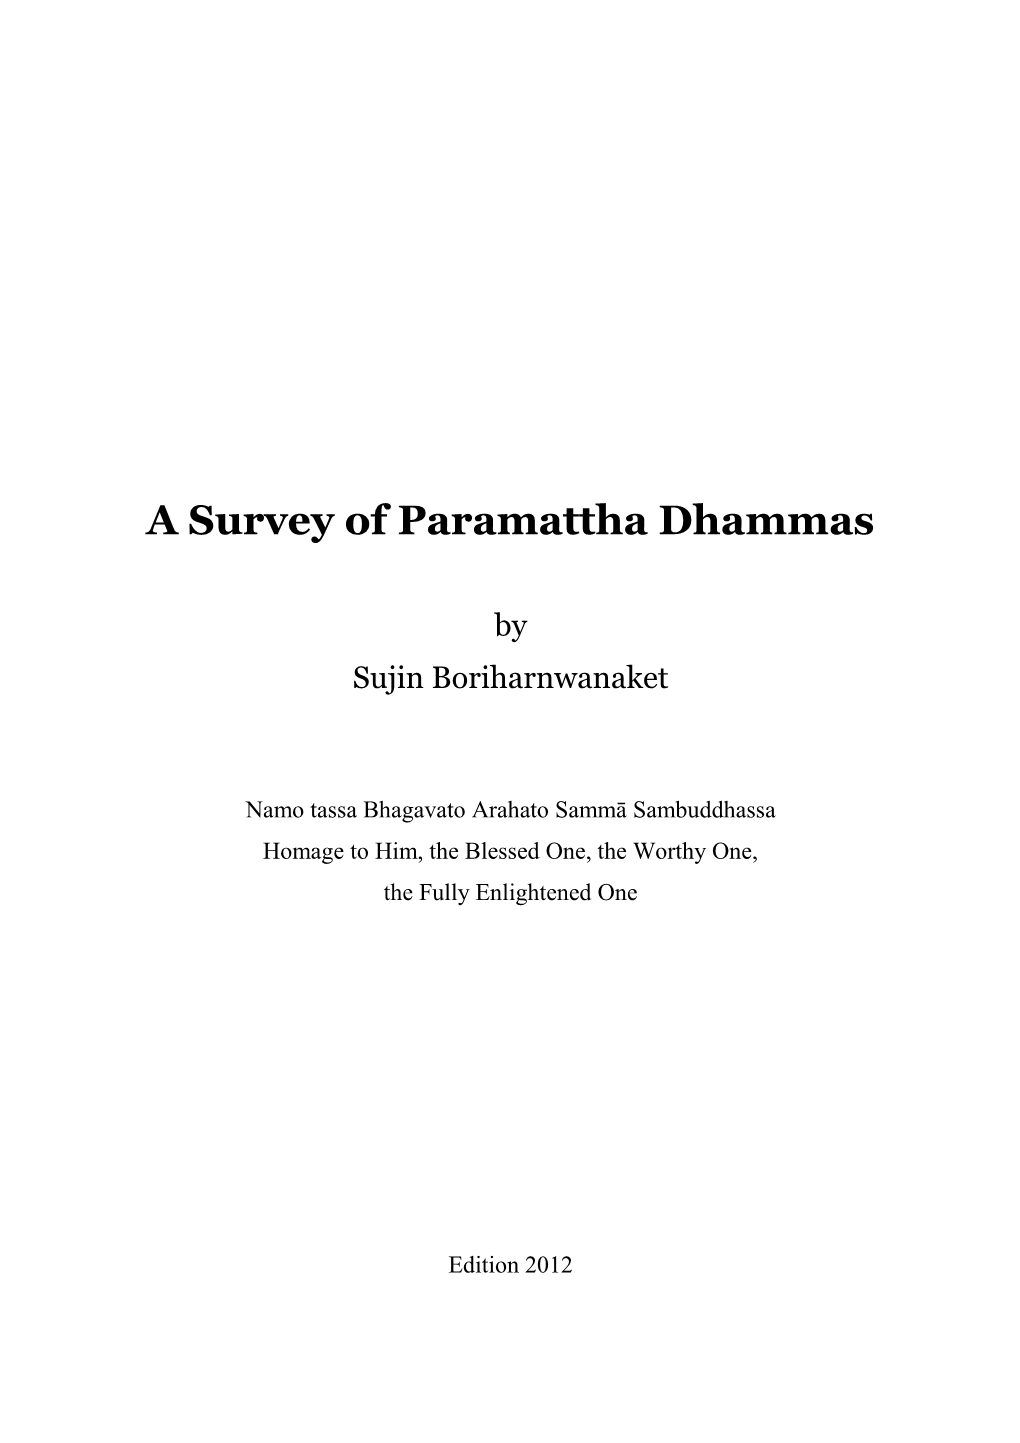 A Survey of Paramattha Dhammas